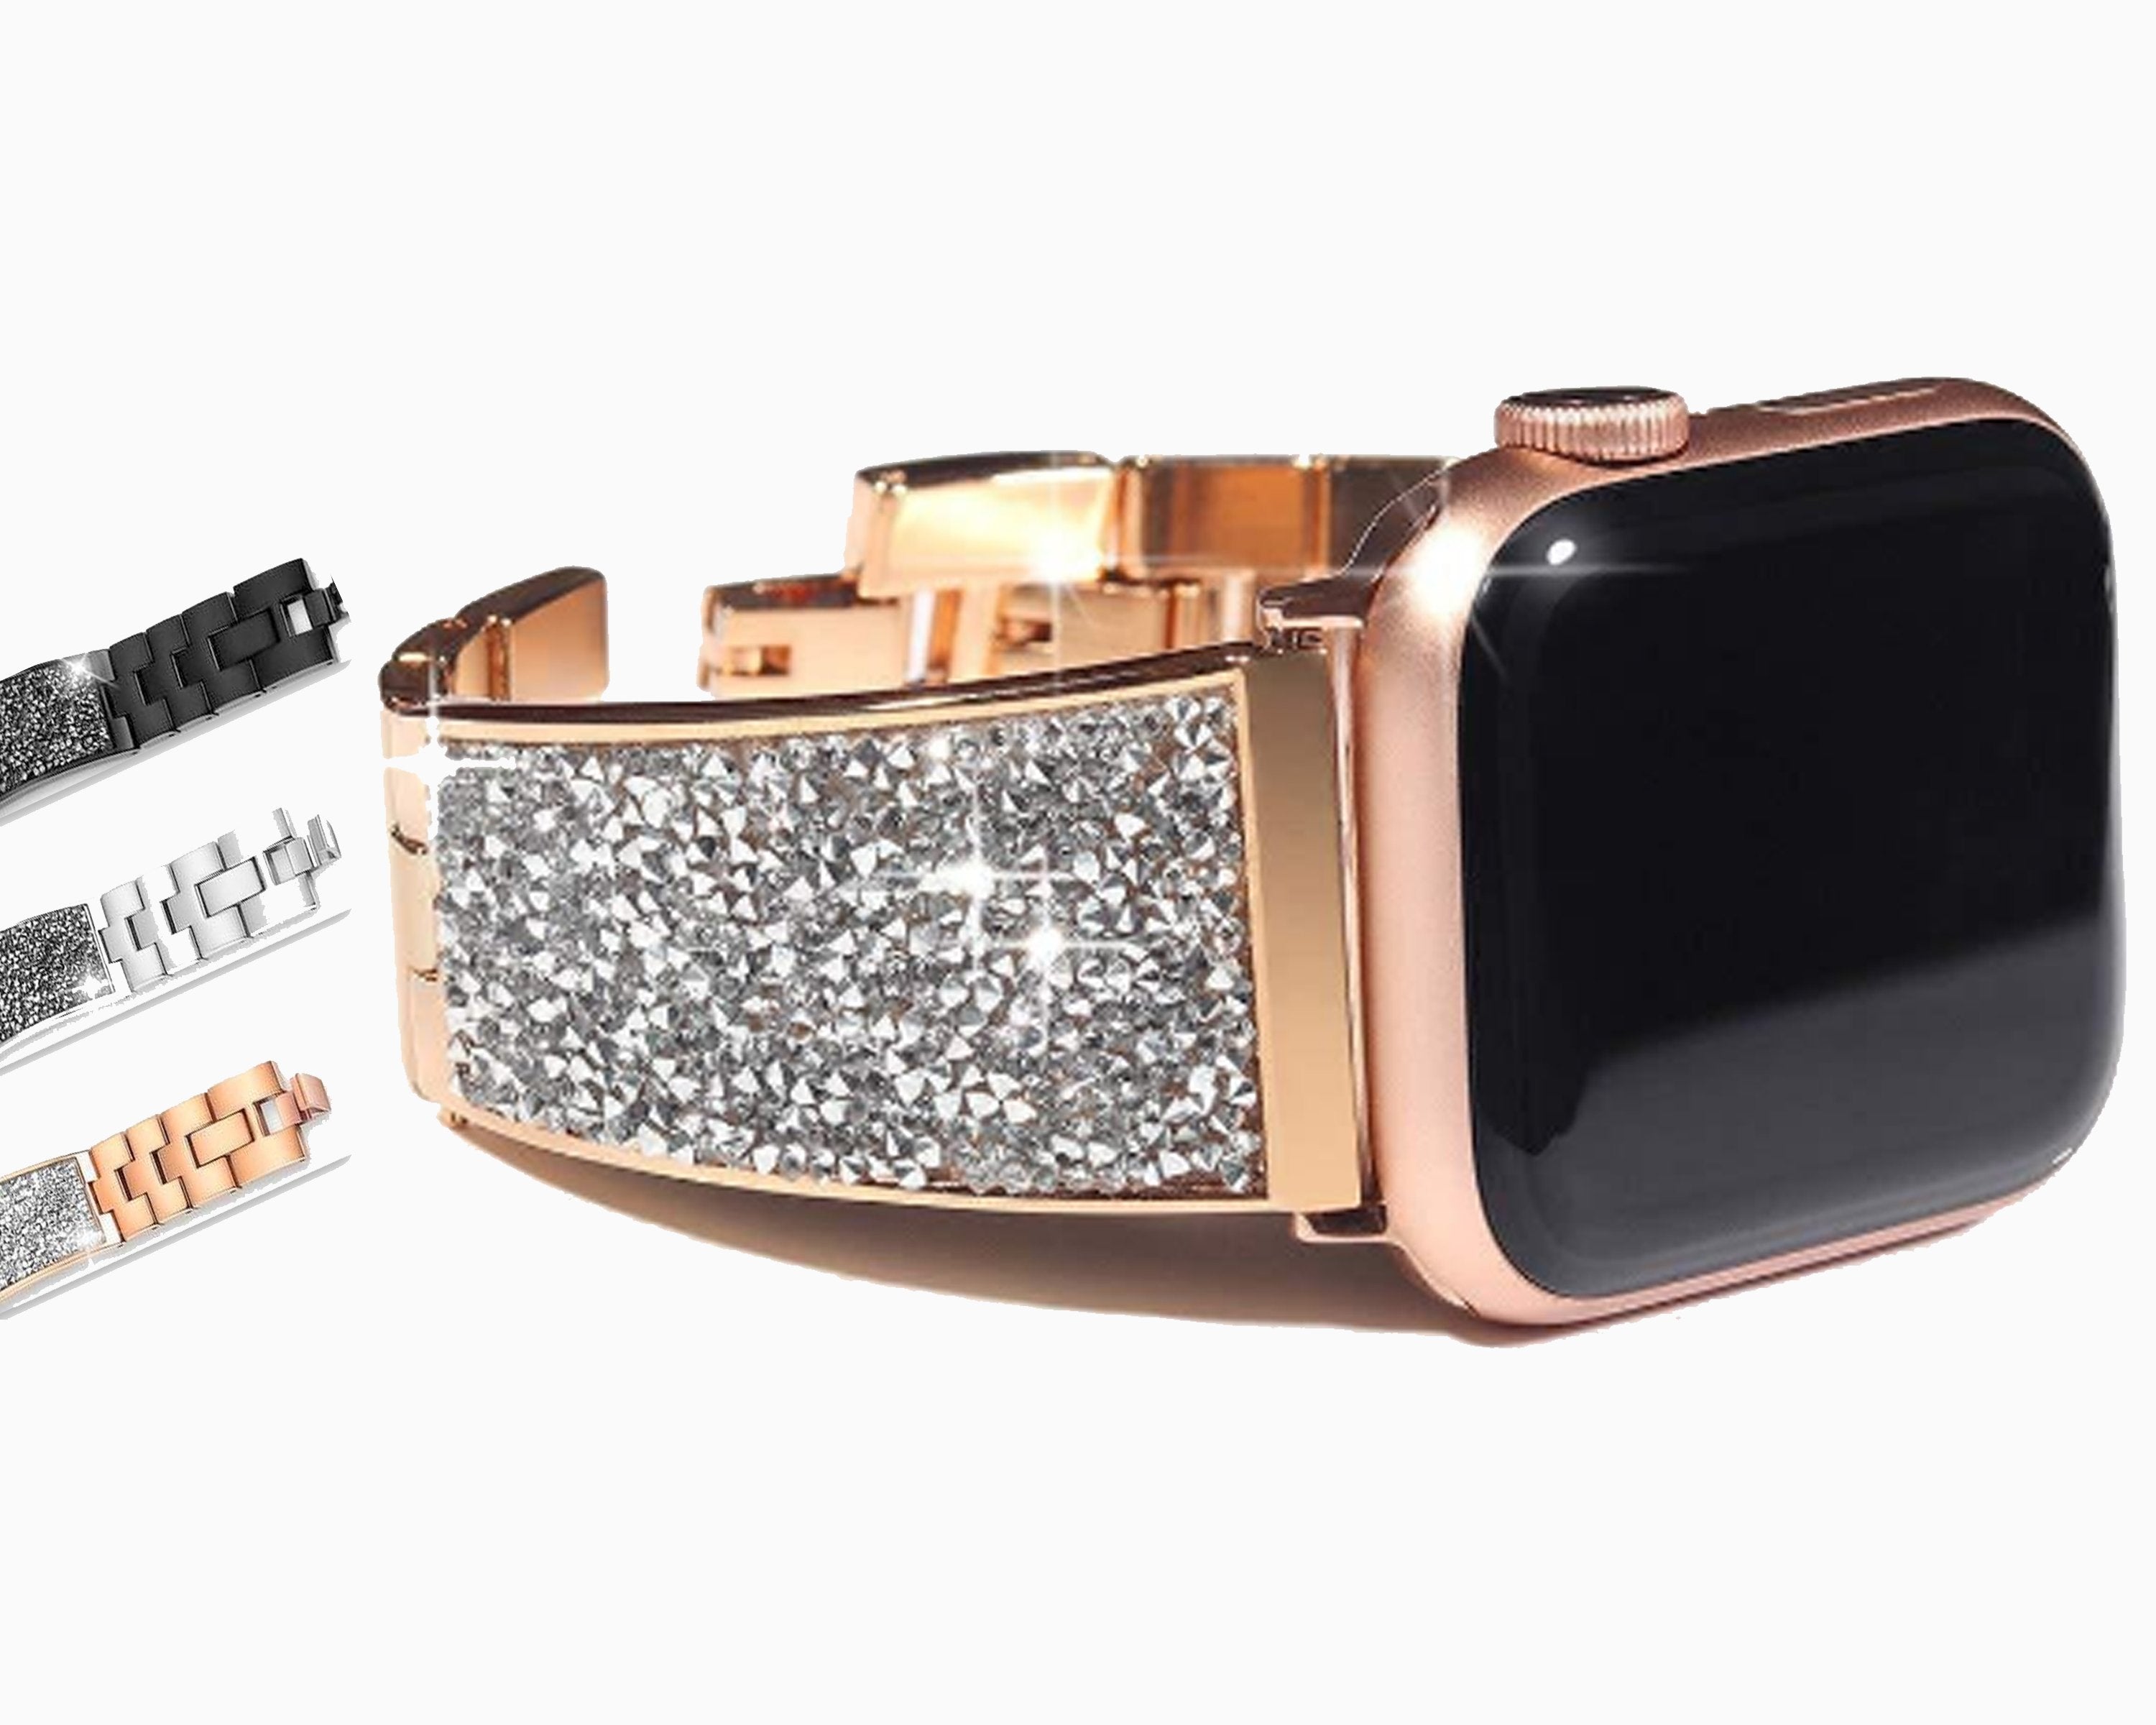 Designer Luxury Watch Band for Apple Watch